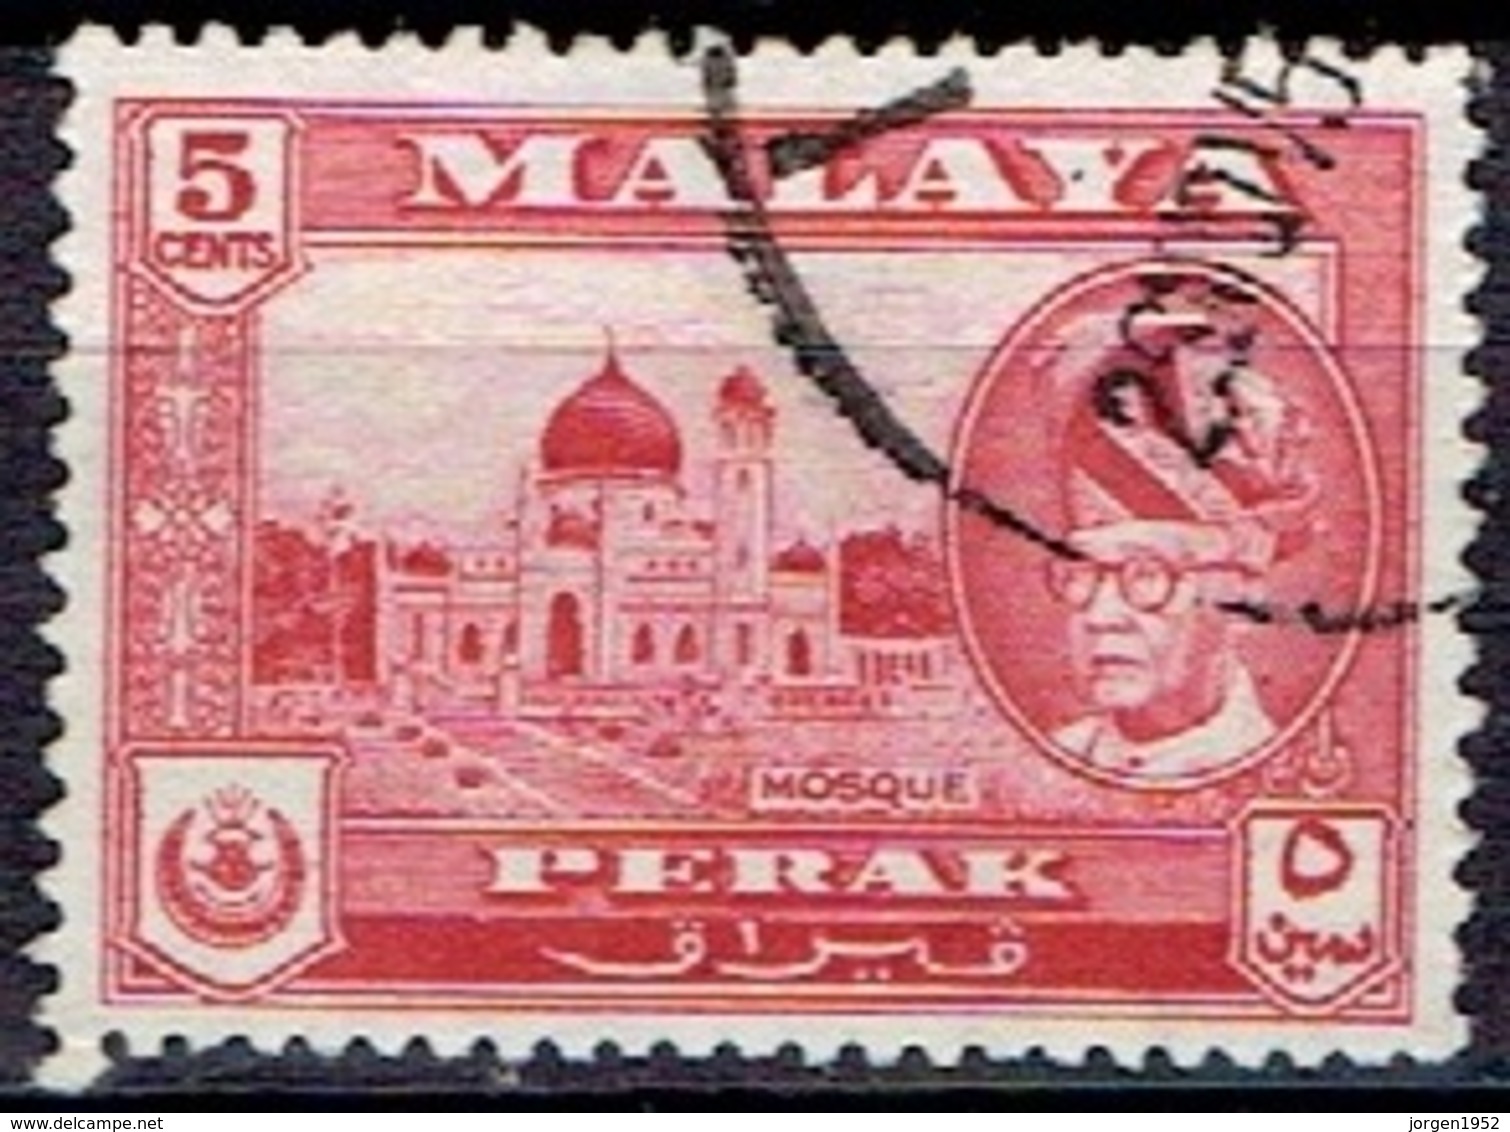 GREAT BRITAIN (FORMER COLONIE)  # PERAK  FROM 1957  STAMPWORLD 107 - Perak